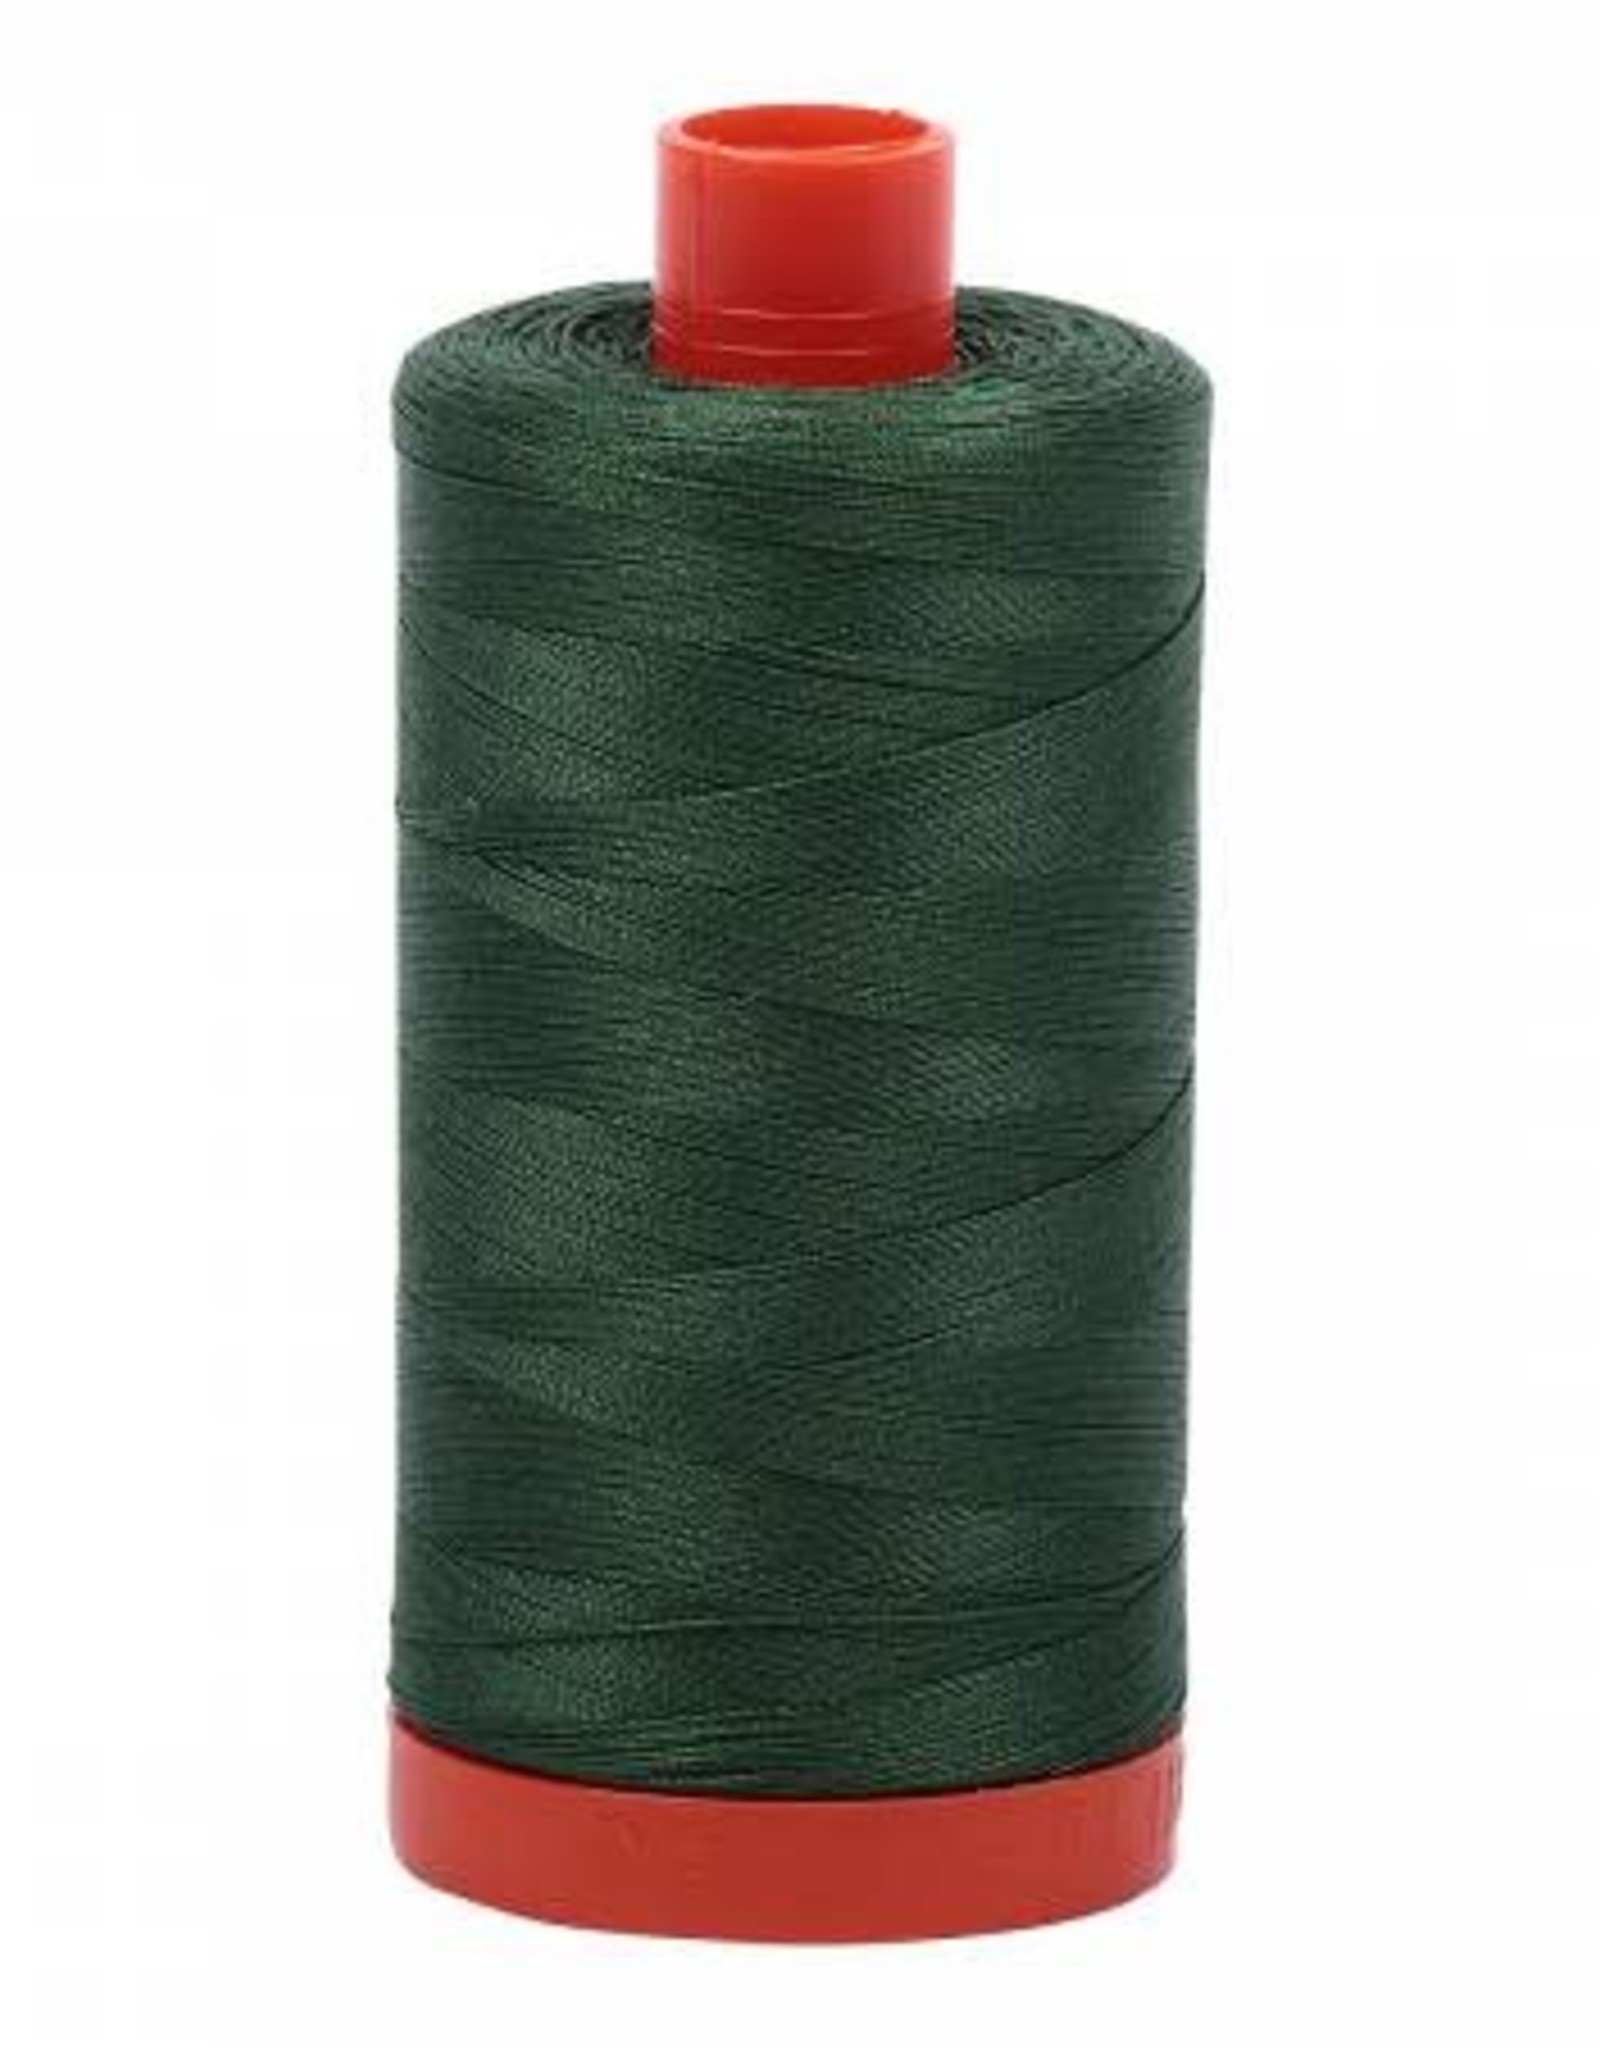 Mako Cotton Thread Solid 50wt - Pine (2892)